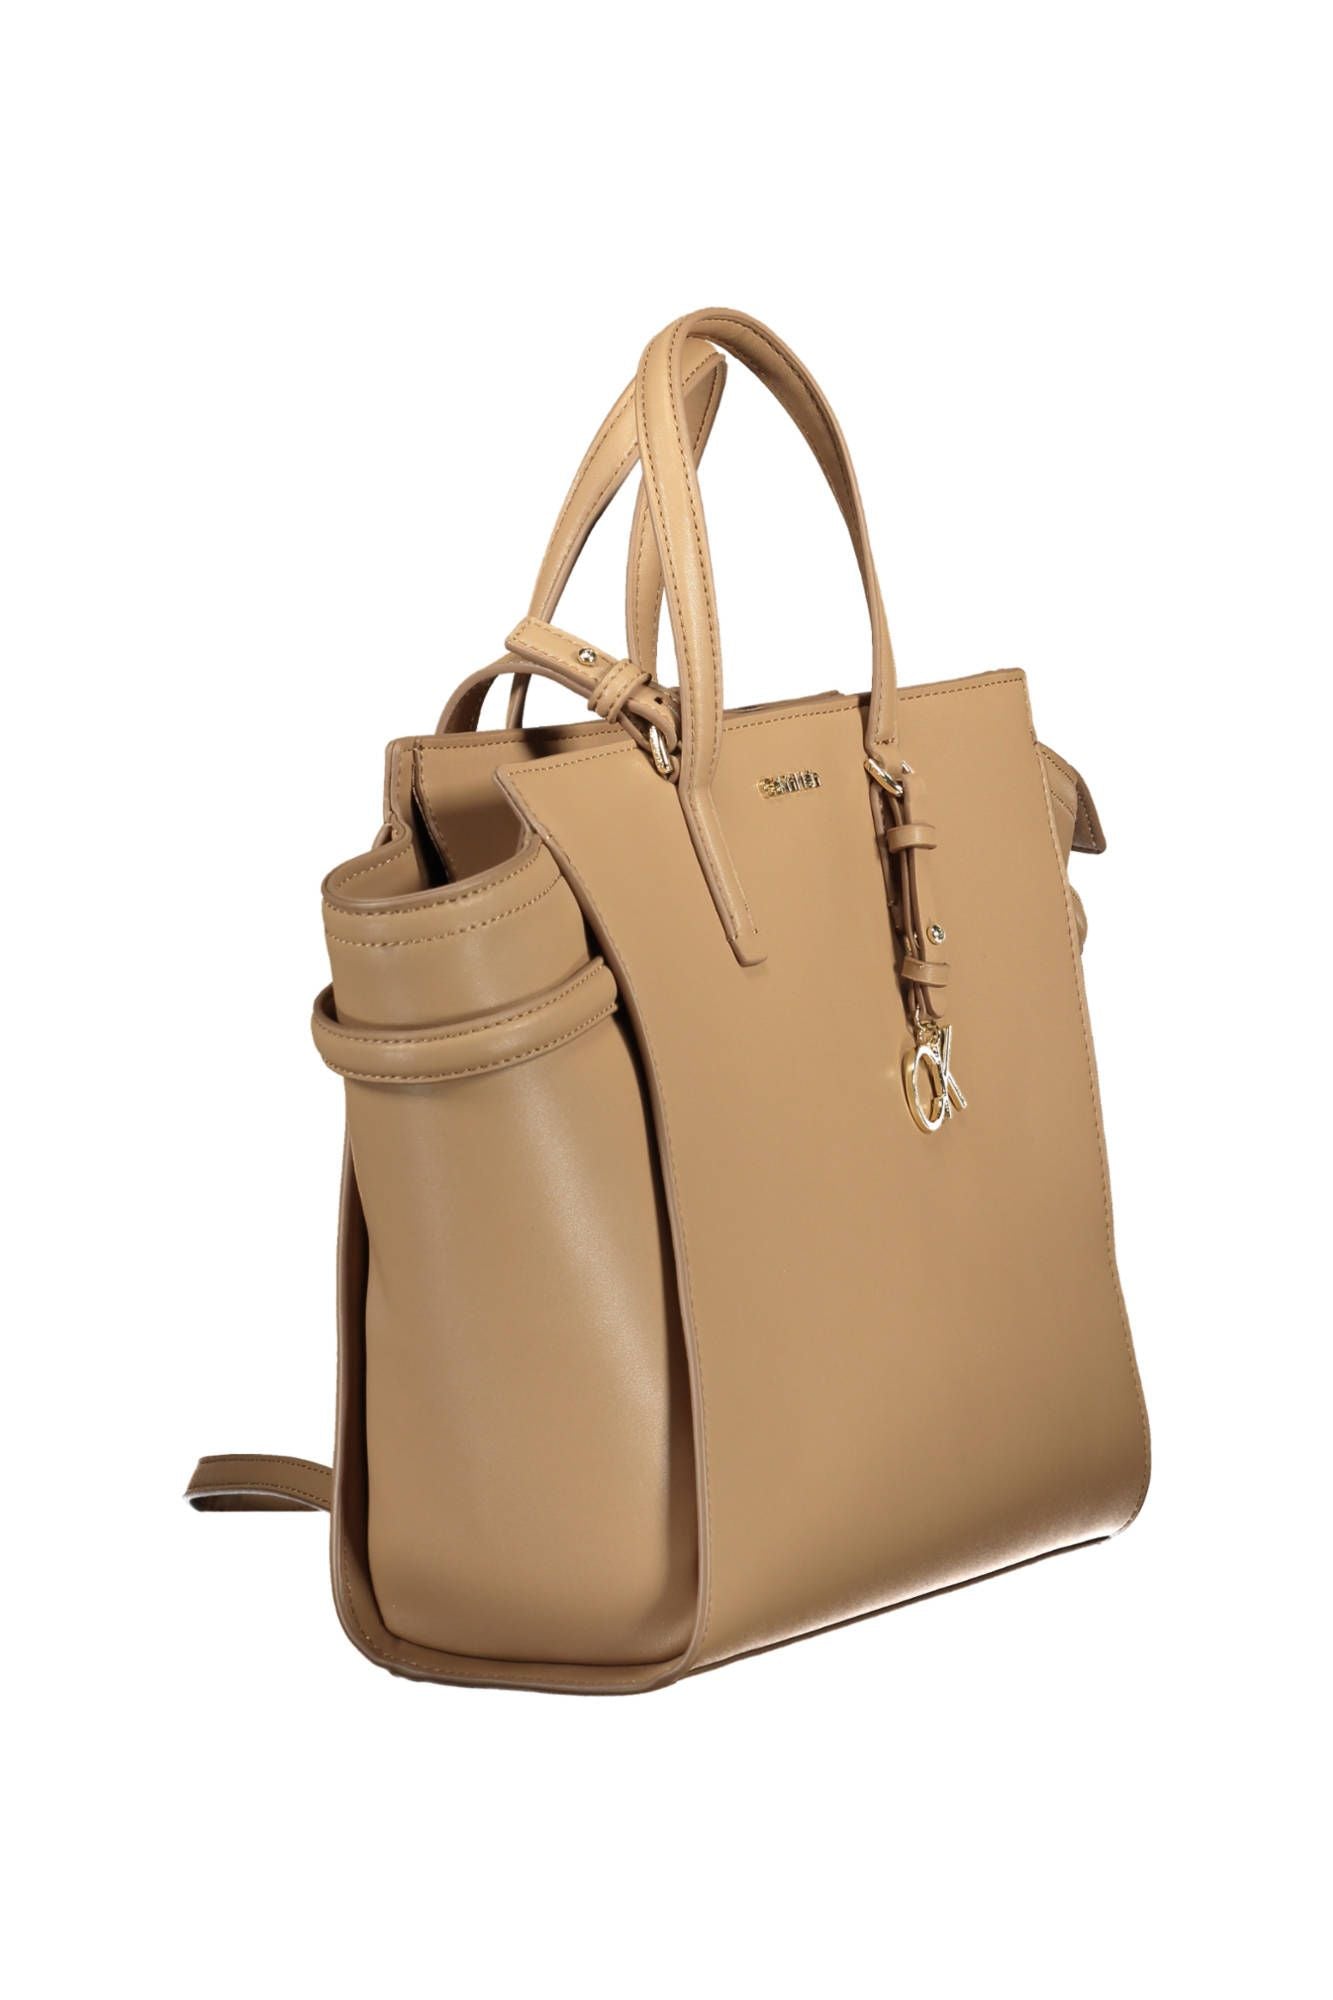 Chic Beige Handbag with Contrasting Details